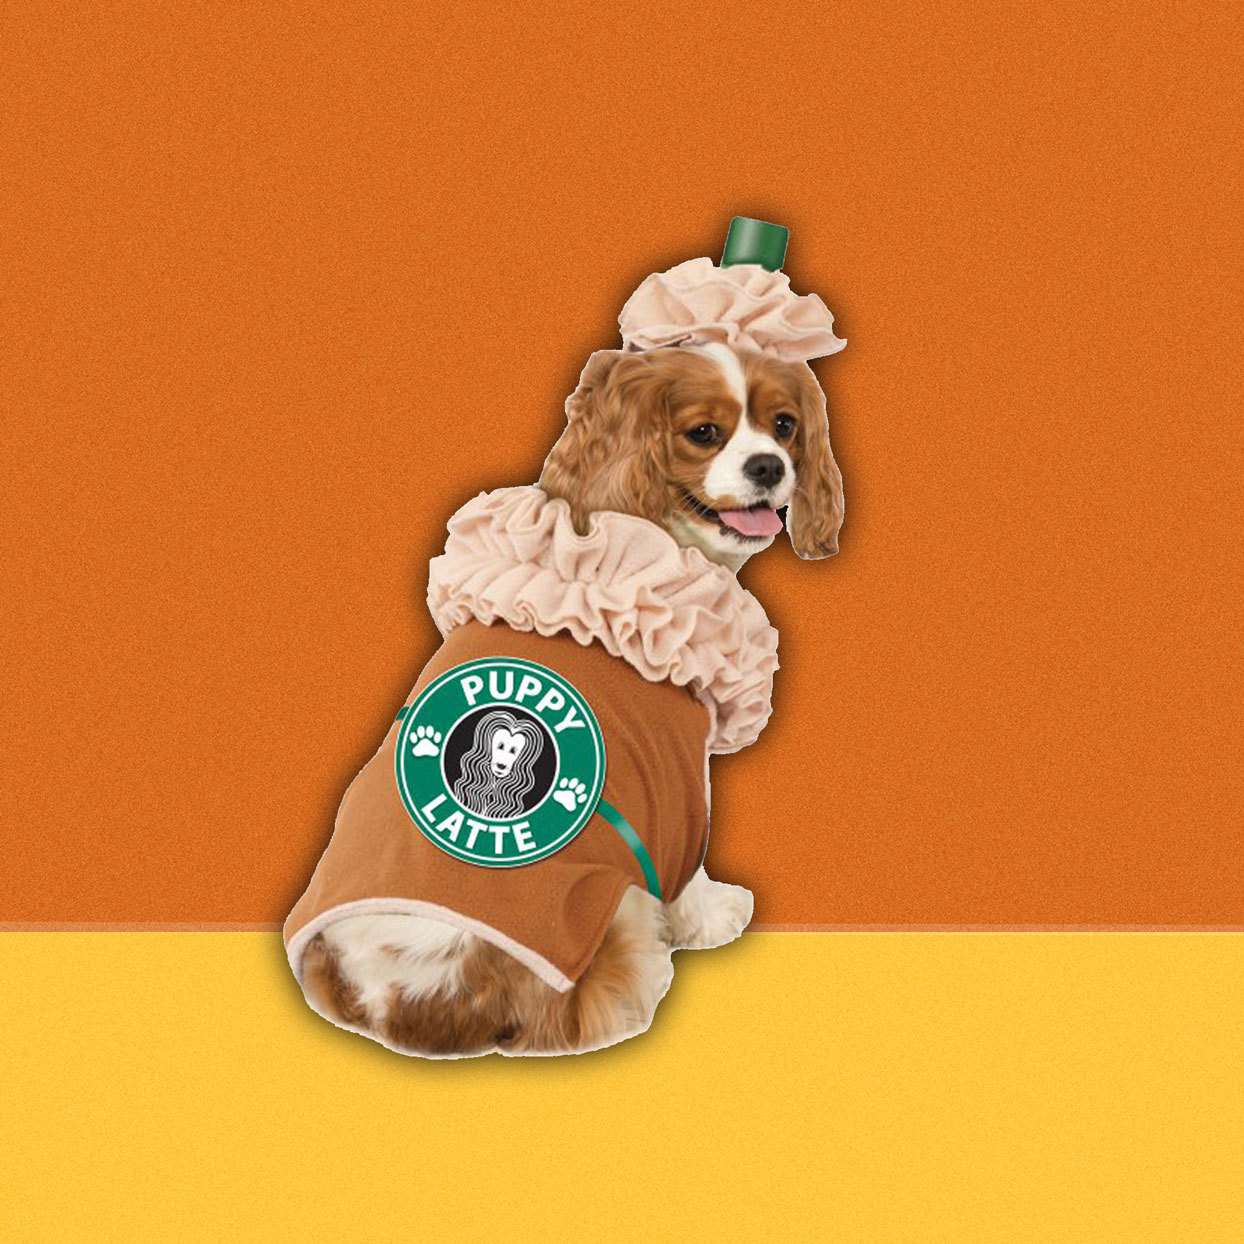 dog in a "Puppy Latte" costume